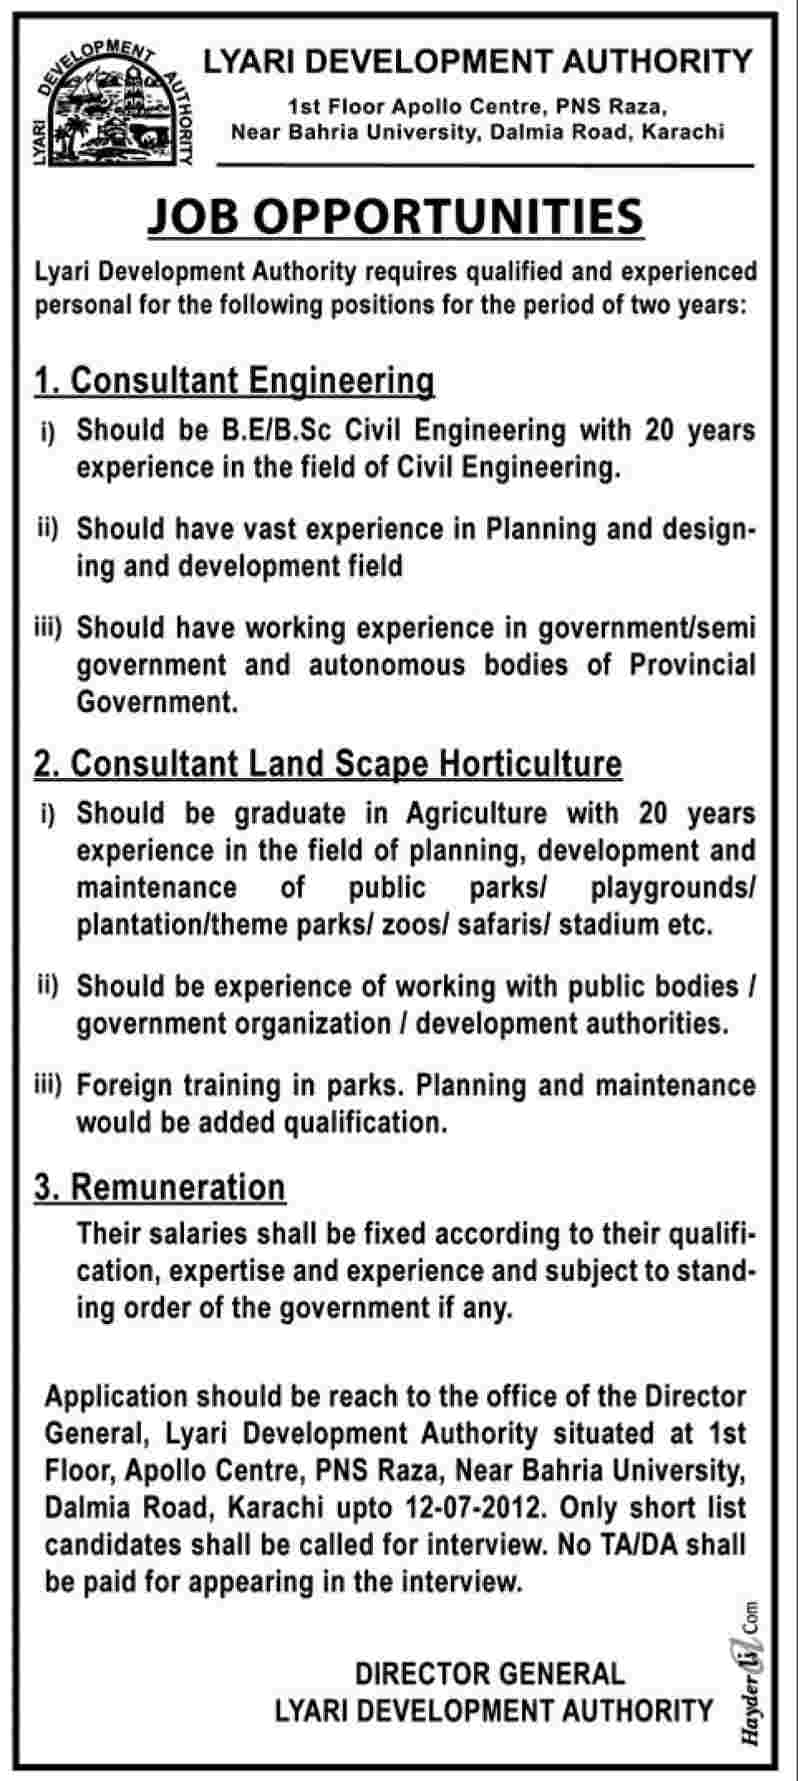 Consultants Needed by Lyari Development Authority (LDA) (Govt. job)